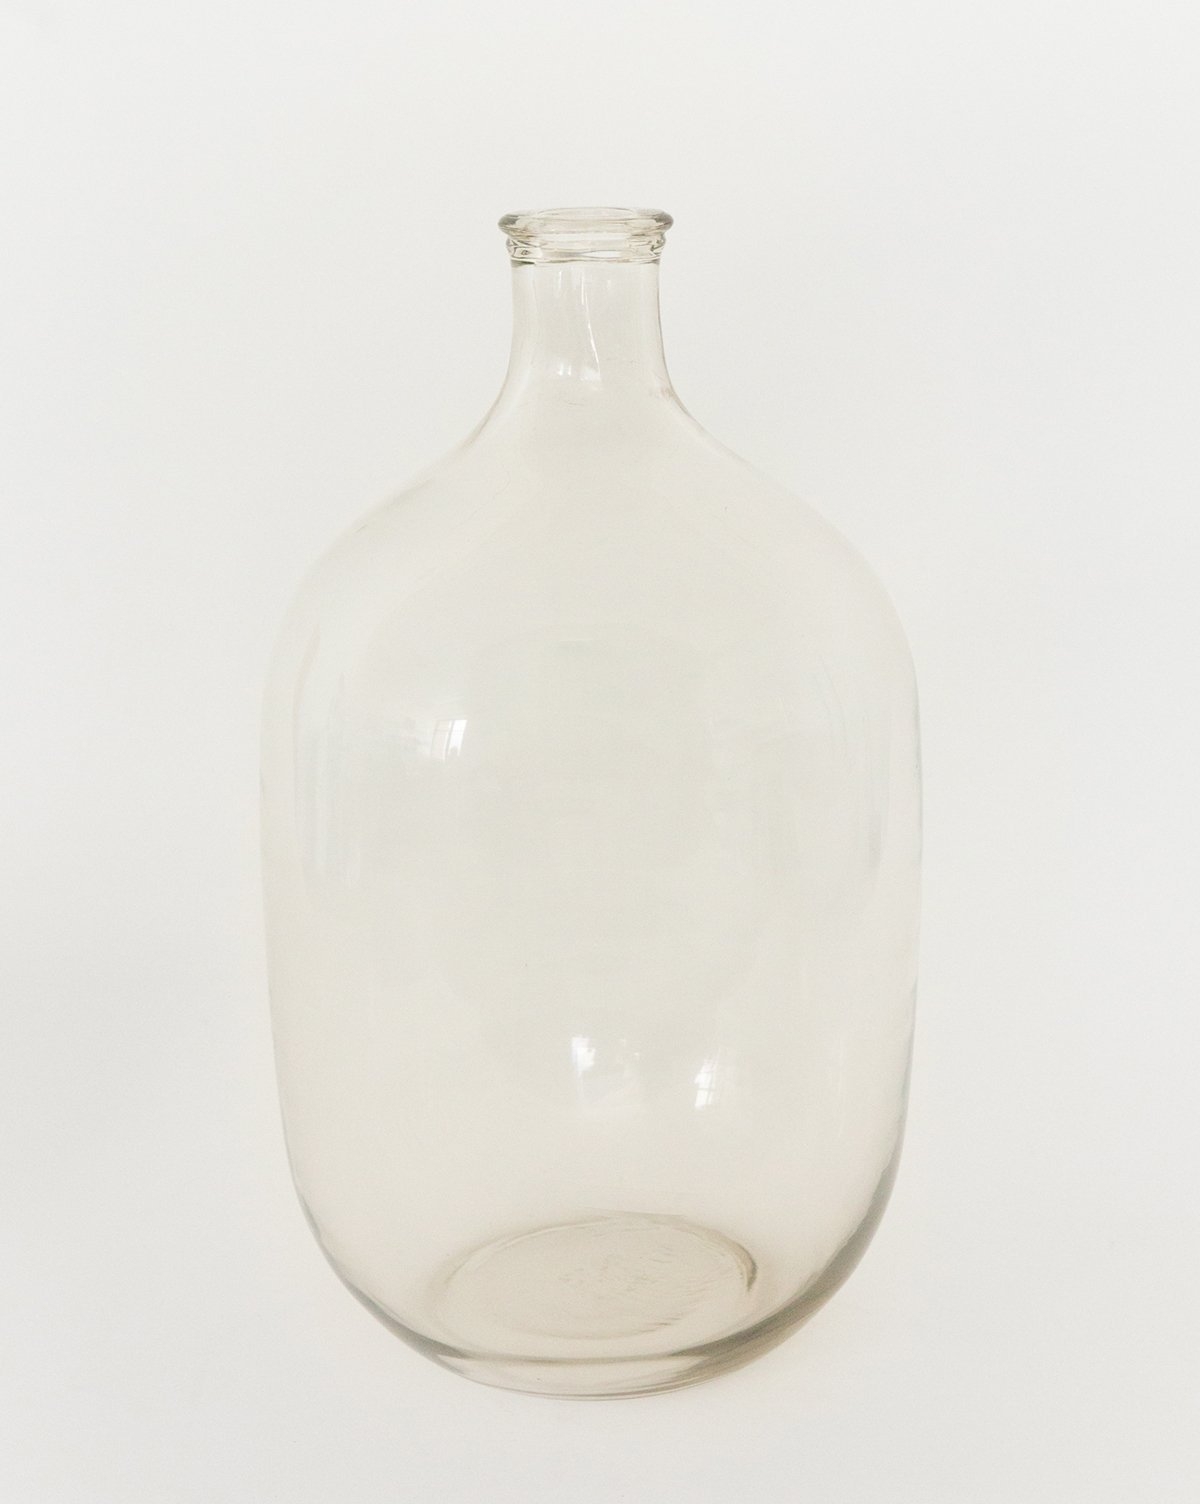 Tara Glass Bottle Vase - Image 1